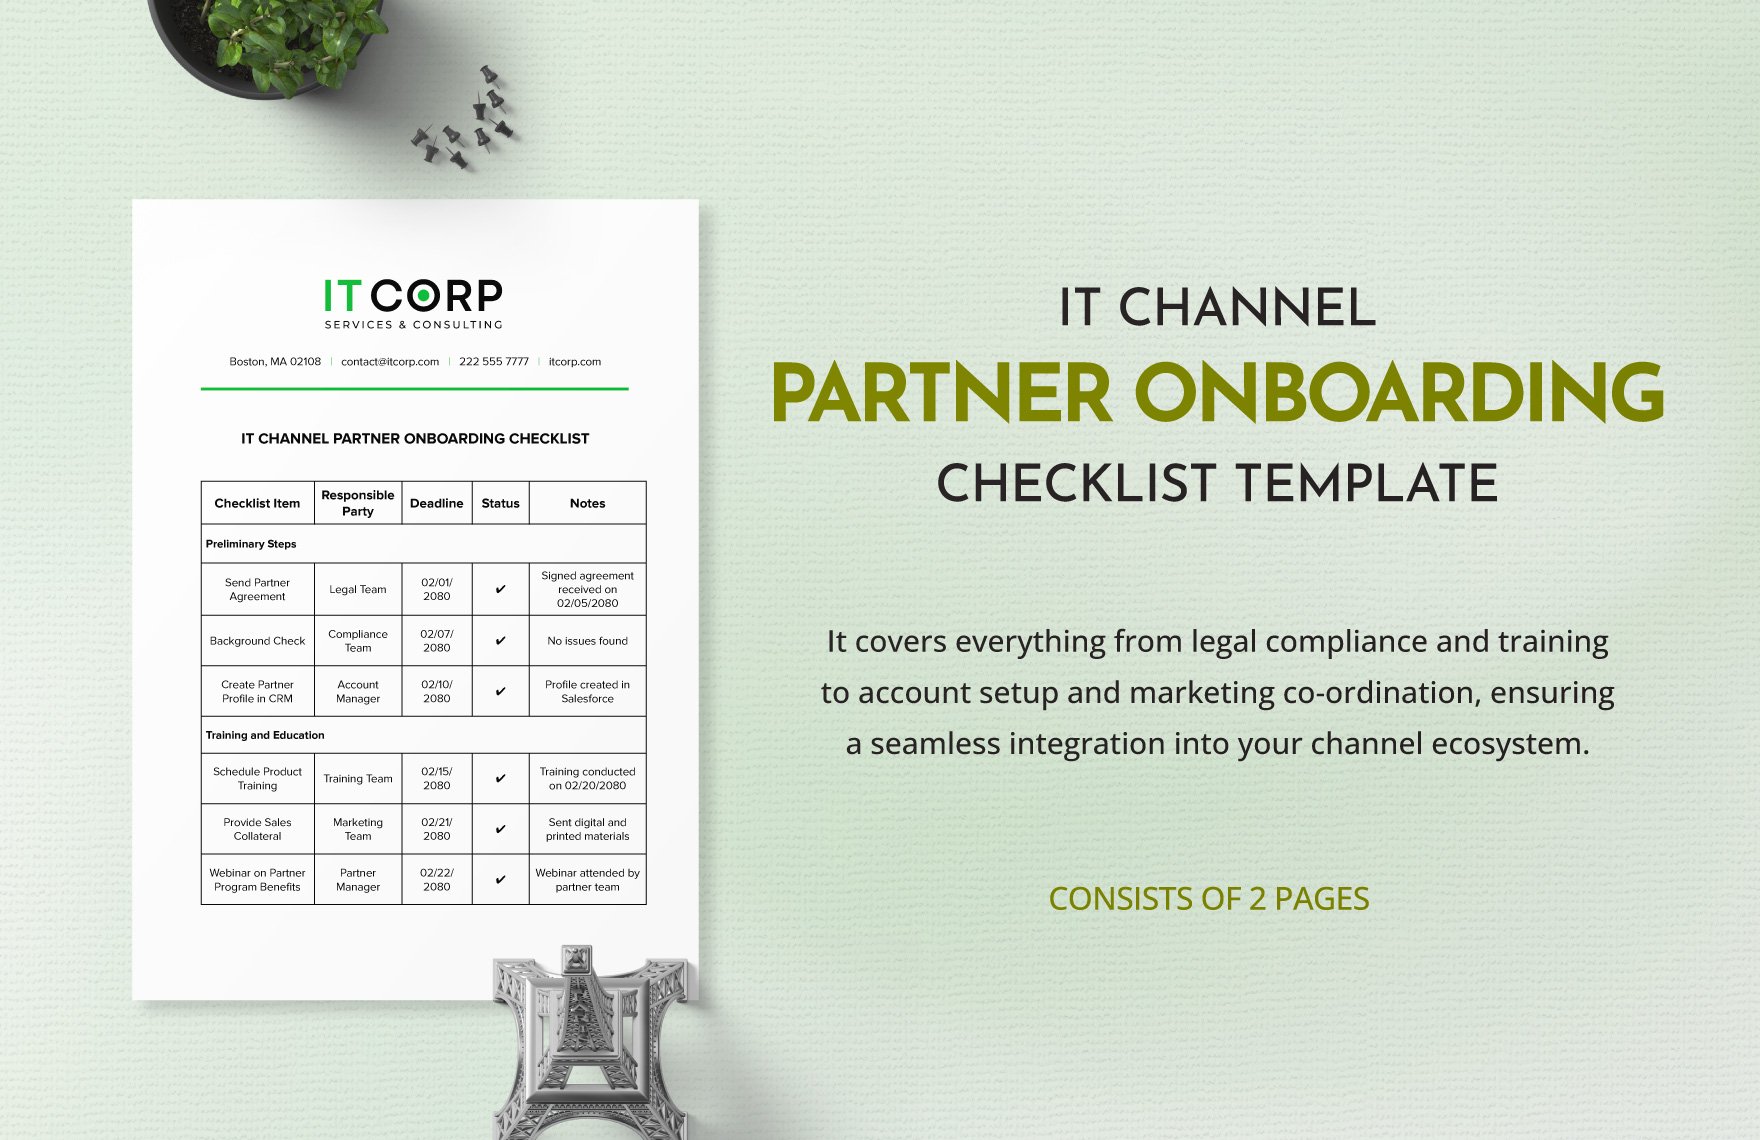 IT Channel Partner Onboarding Checklist Template